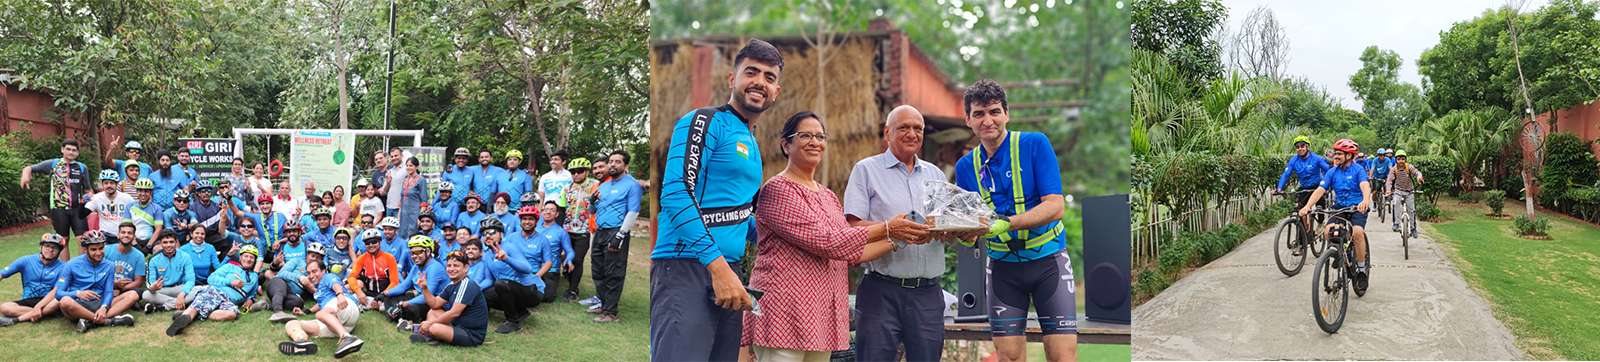 Cycling Groups of Chandigarh Tricity and Ambala Hold 50-km Long Run